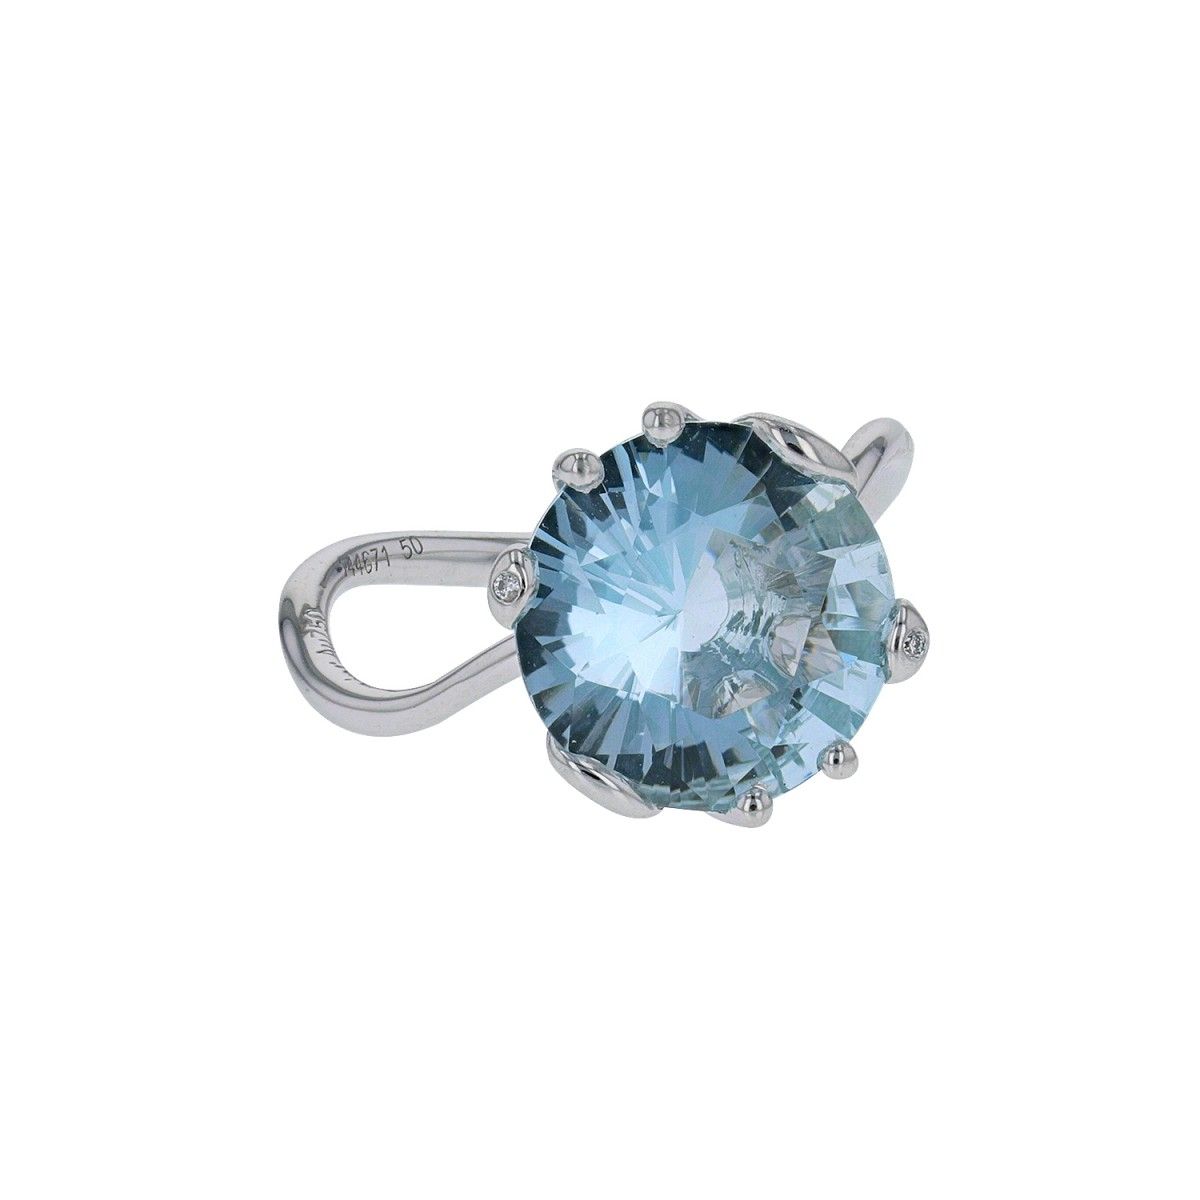 Dior Oui Aquamarine, Diamonds And Gold Ring Regarding Aquamarine And Diamond Rings (View 13 of 25)